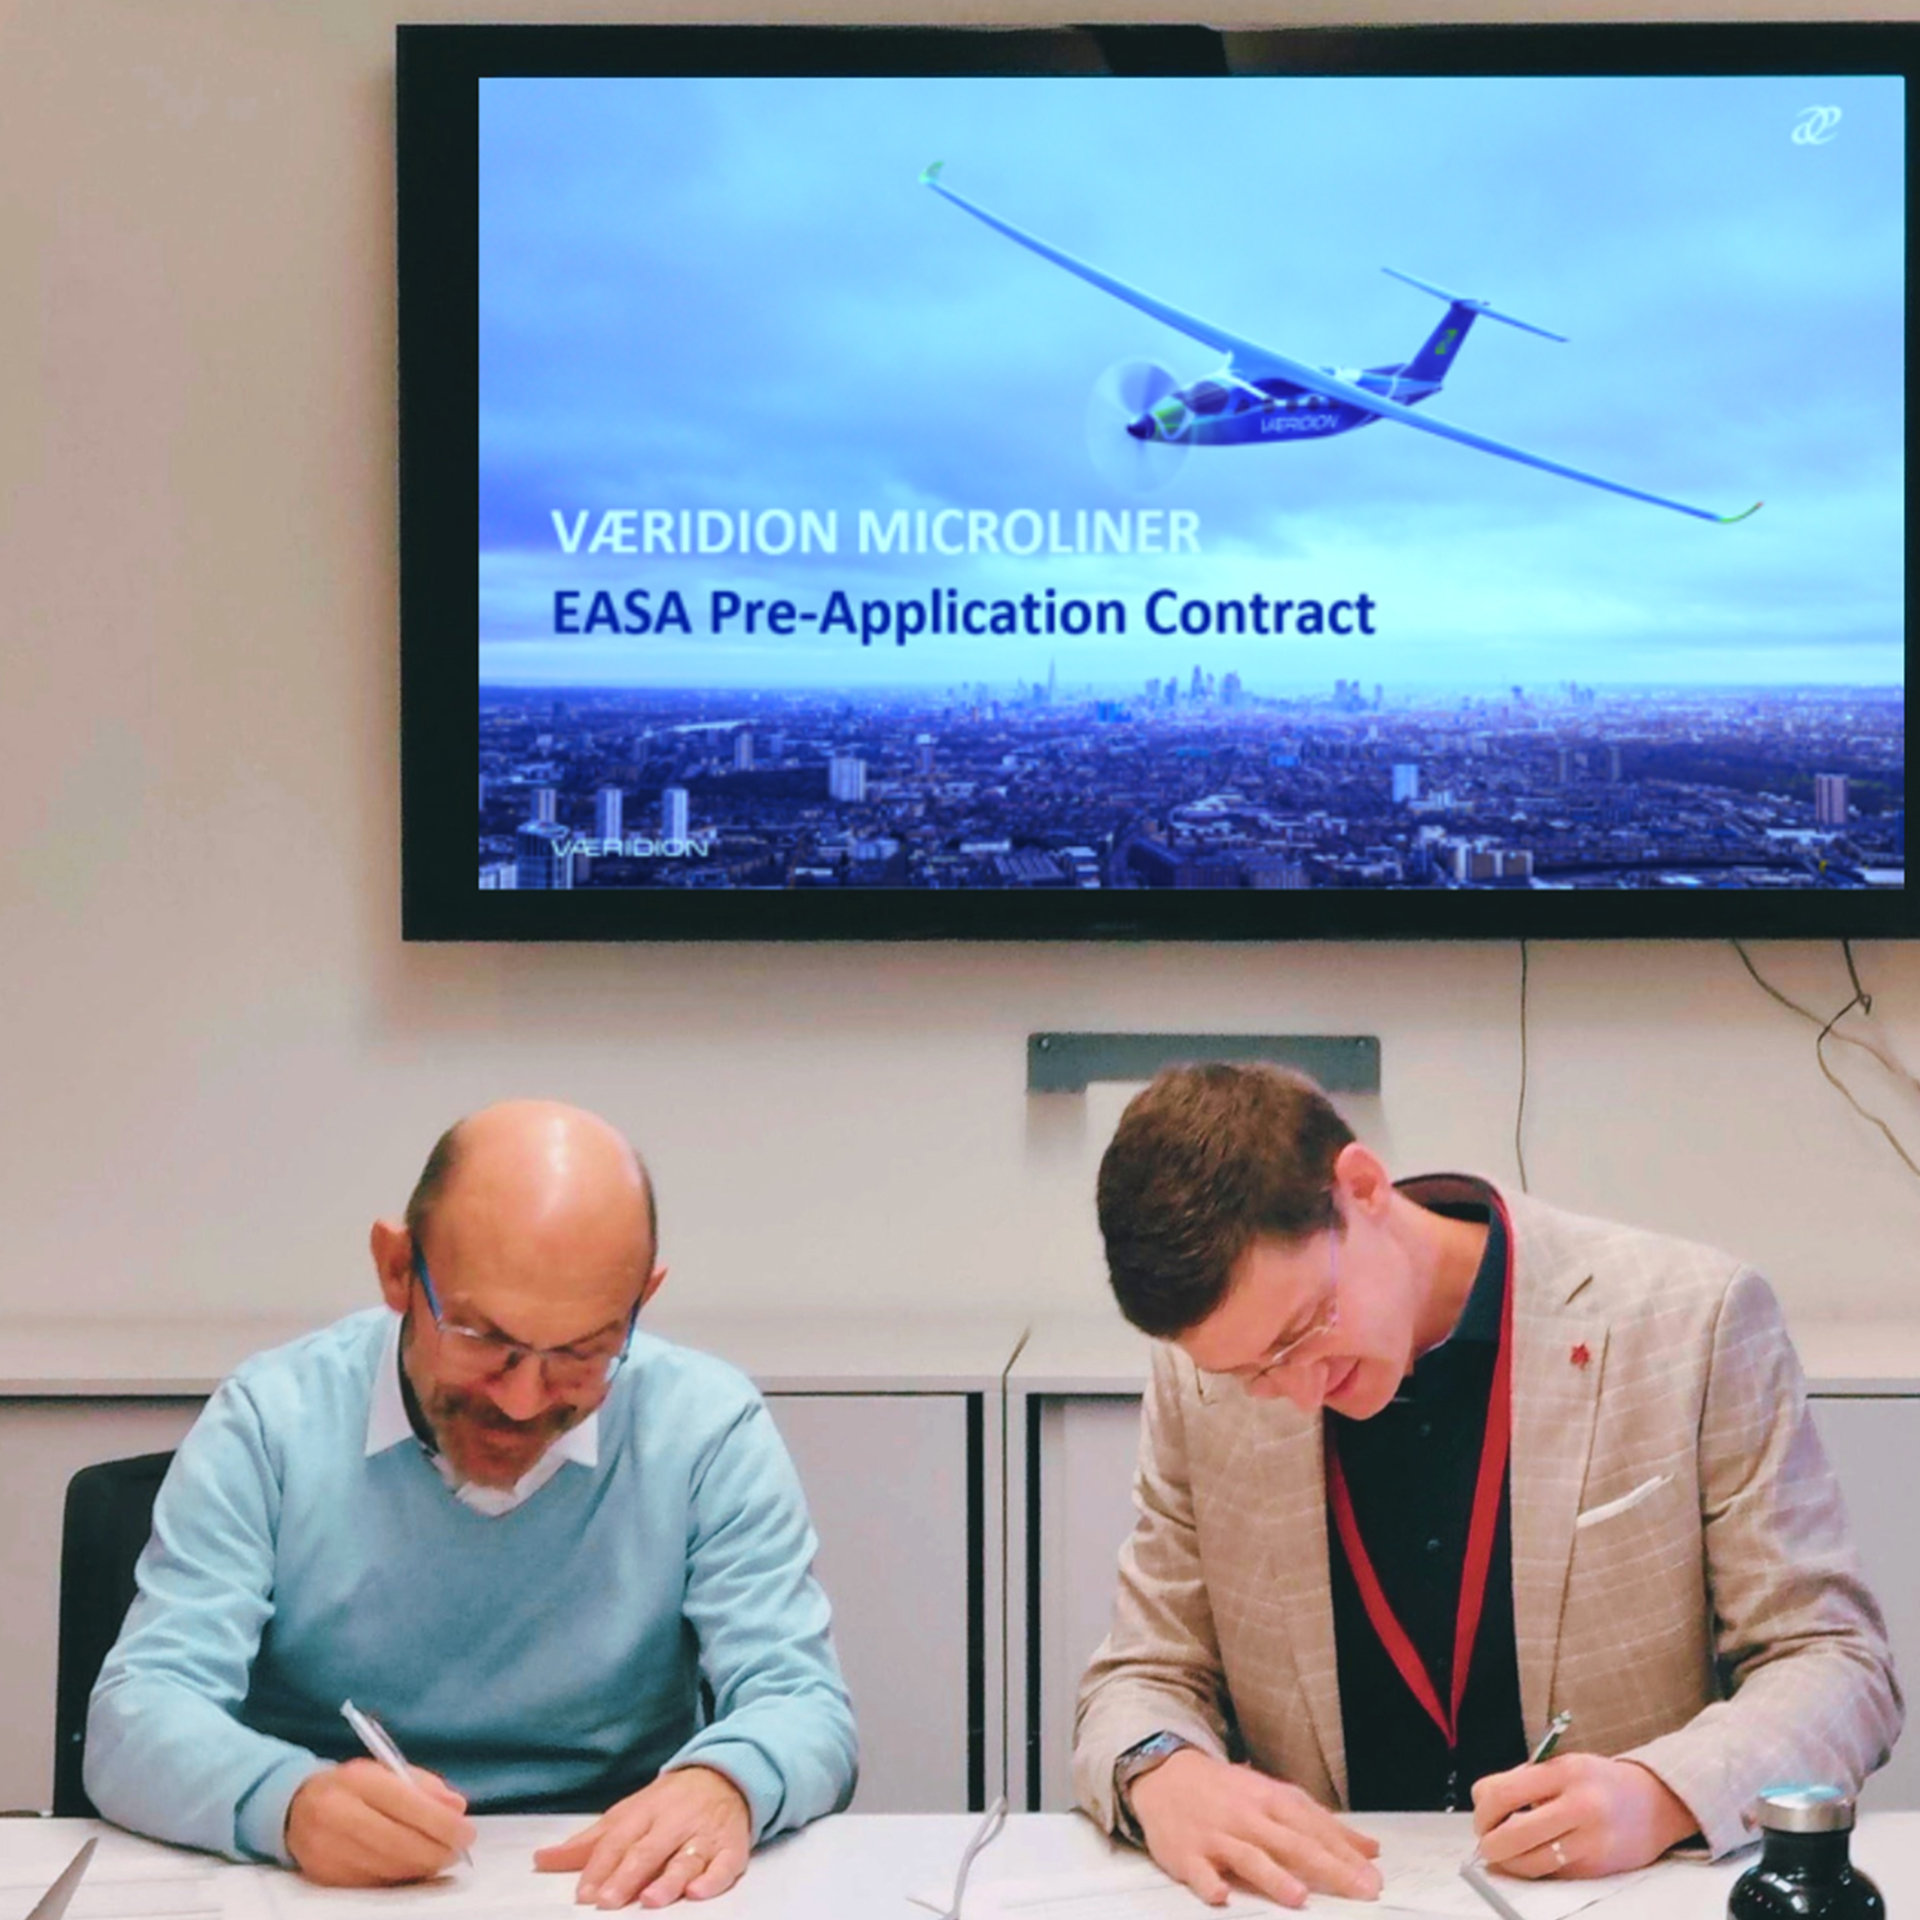 Alain Leroy, EASA, and Dr. Sebastian Seemann, VAERIDION, signing the pre-application-contract